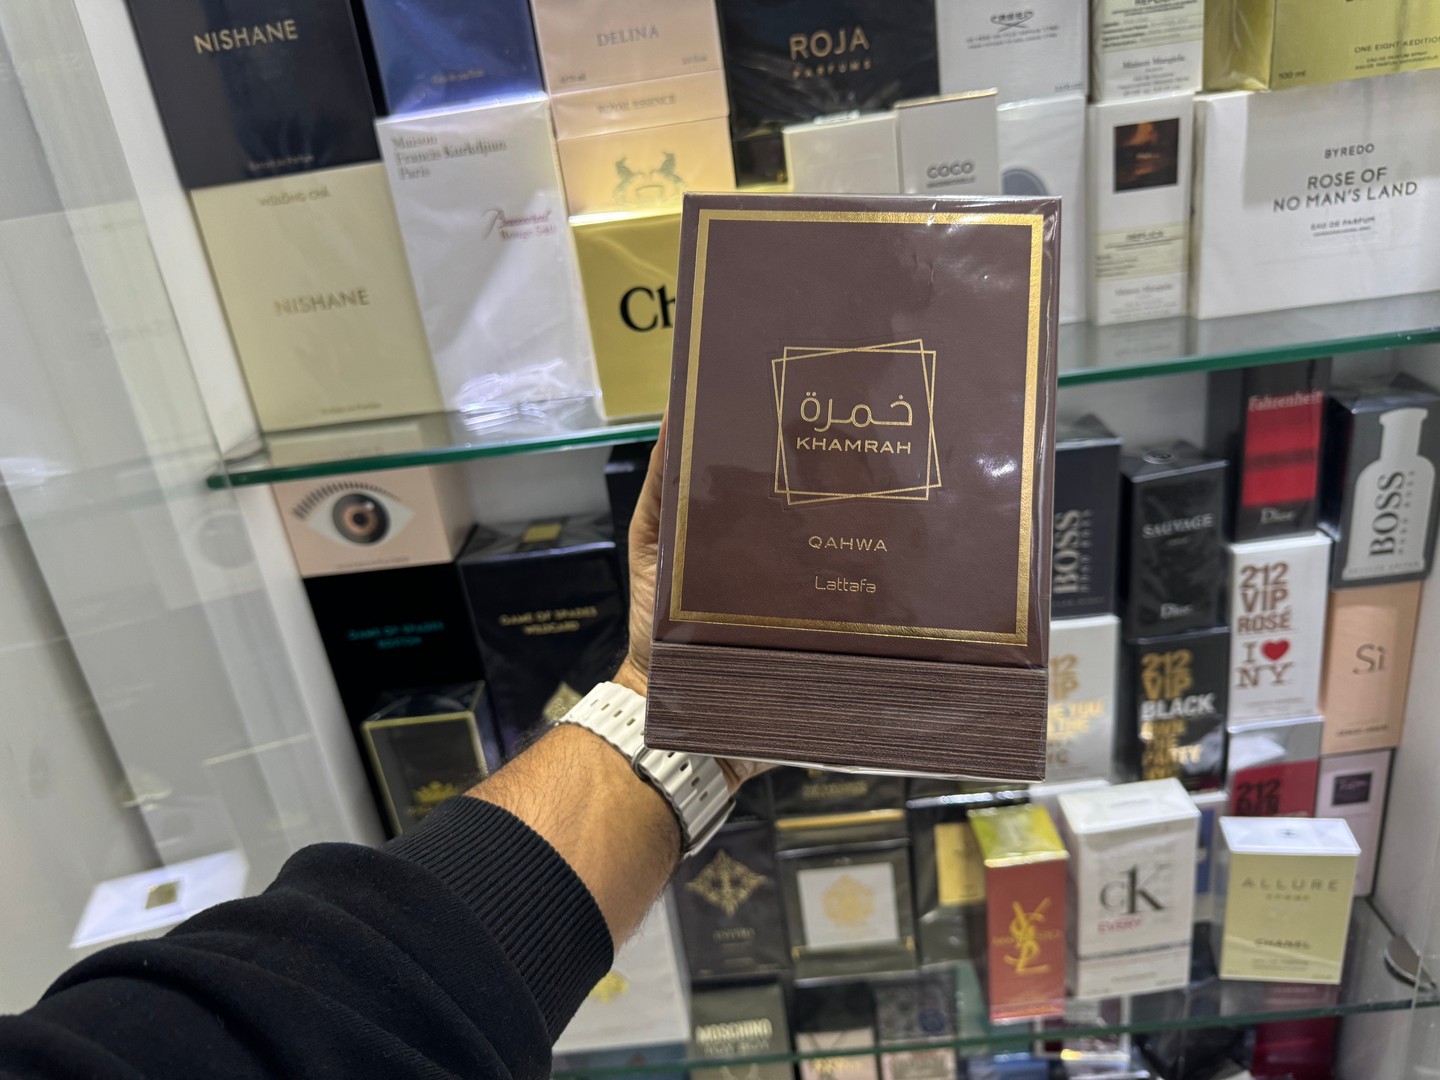 joyas, relojes y accesorios - Perfume KHAMRAH QAHWA Lattafa 100ML o 3.4OZFL Nuevo, Original , RD$ 4,800 NEG 0